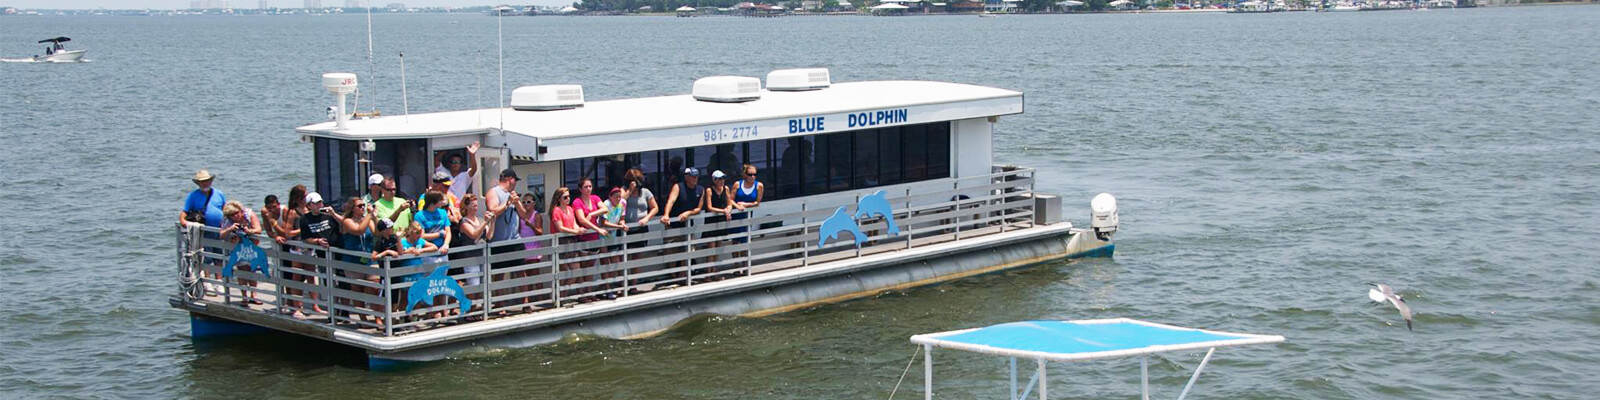 Blue Dolphin Cruises Promo Code